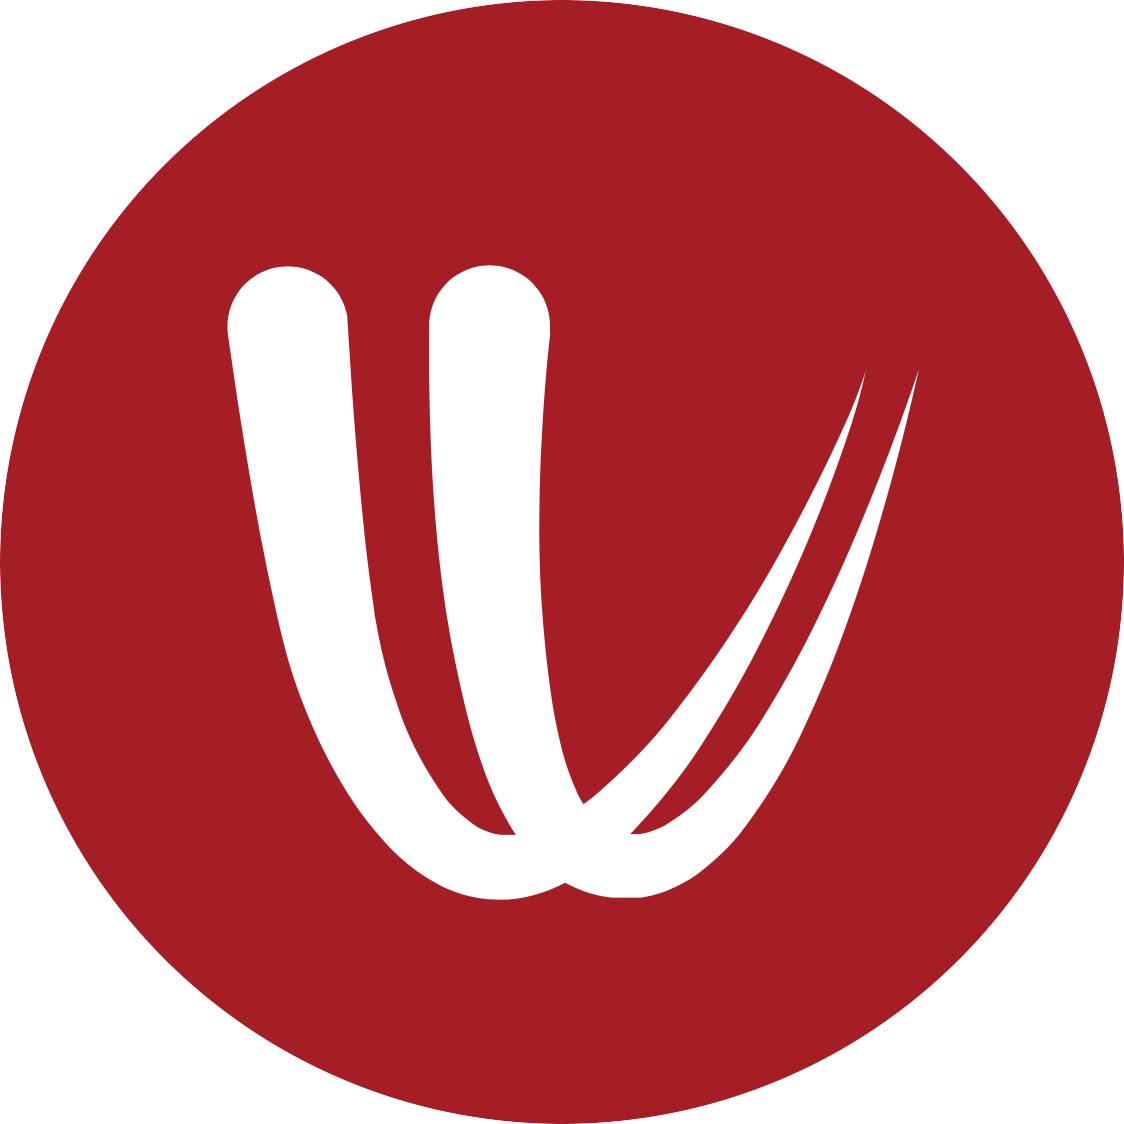 Logo windy